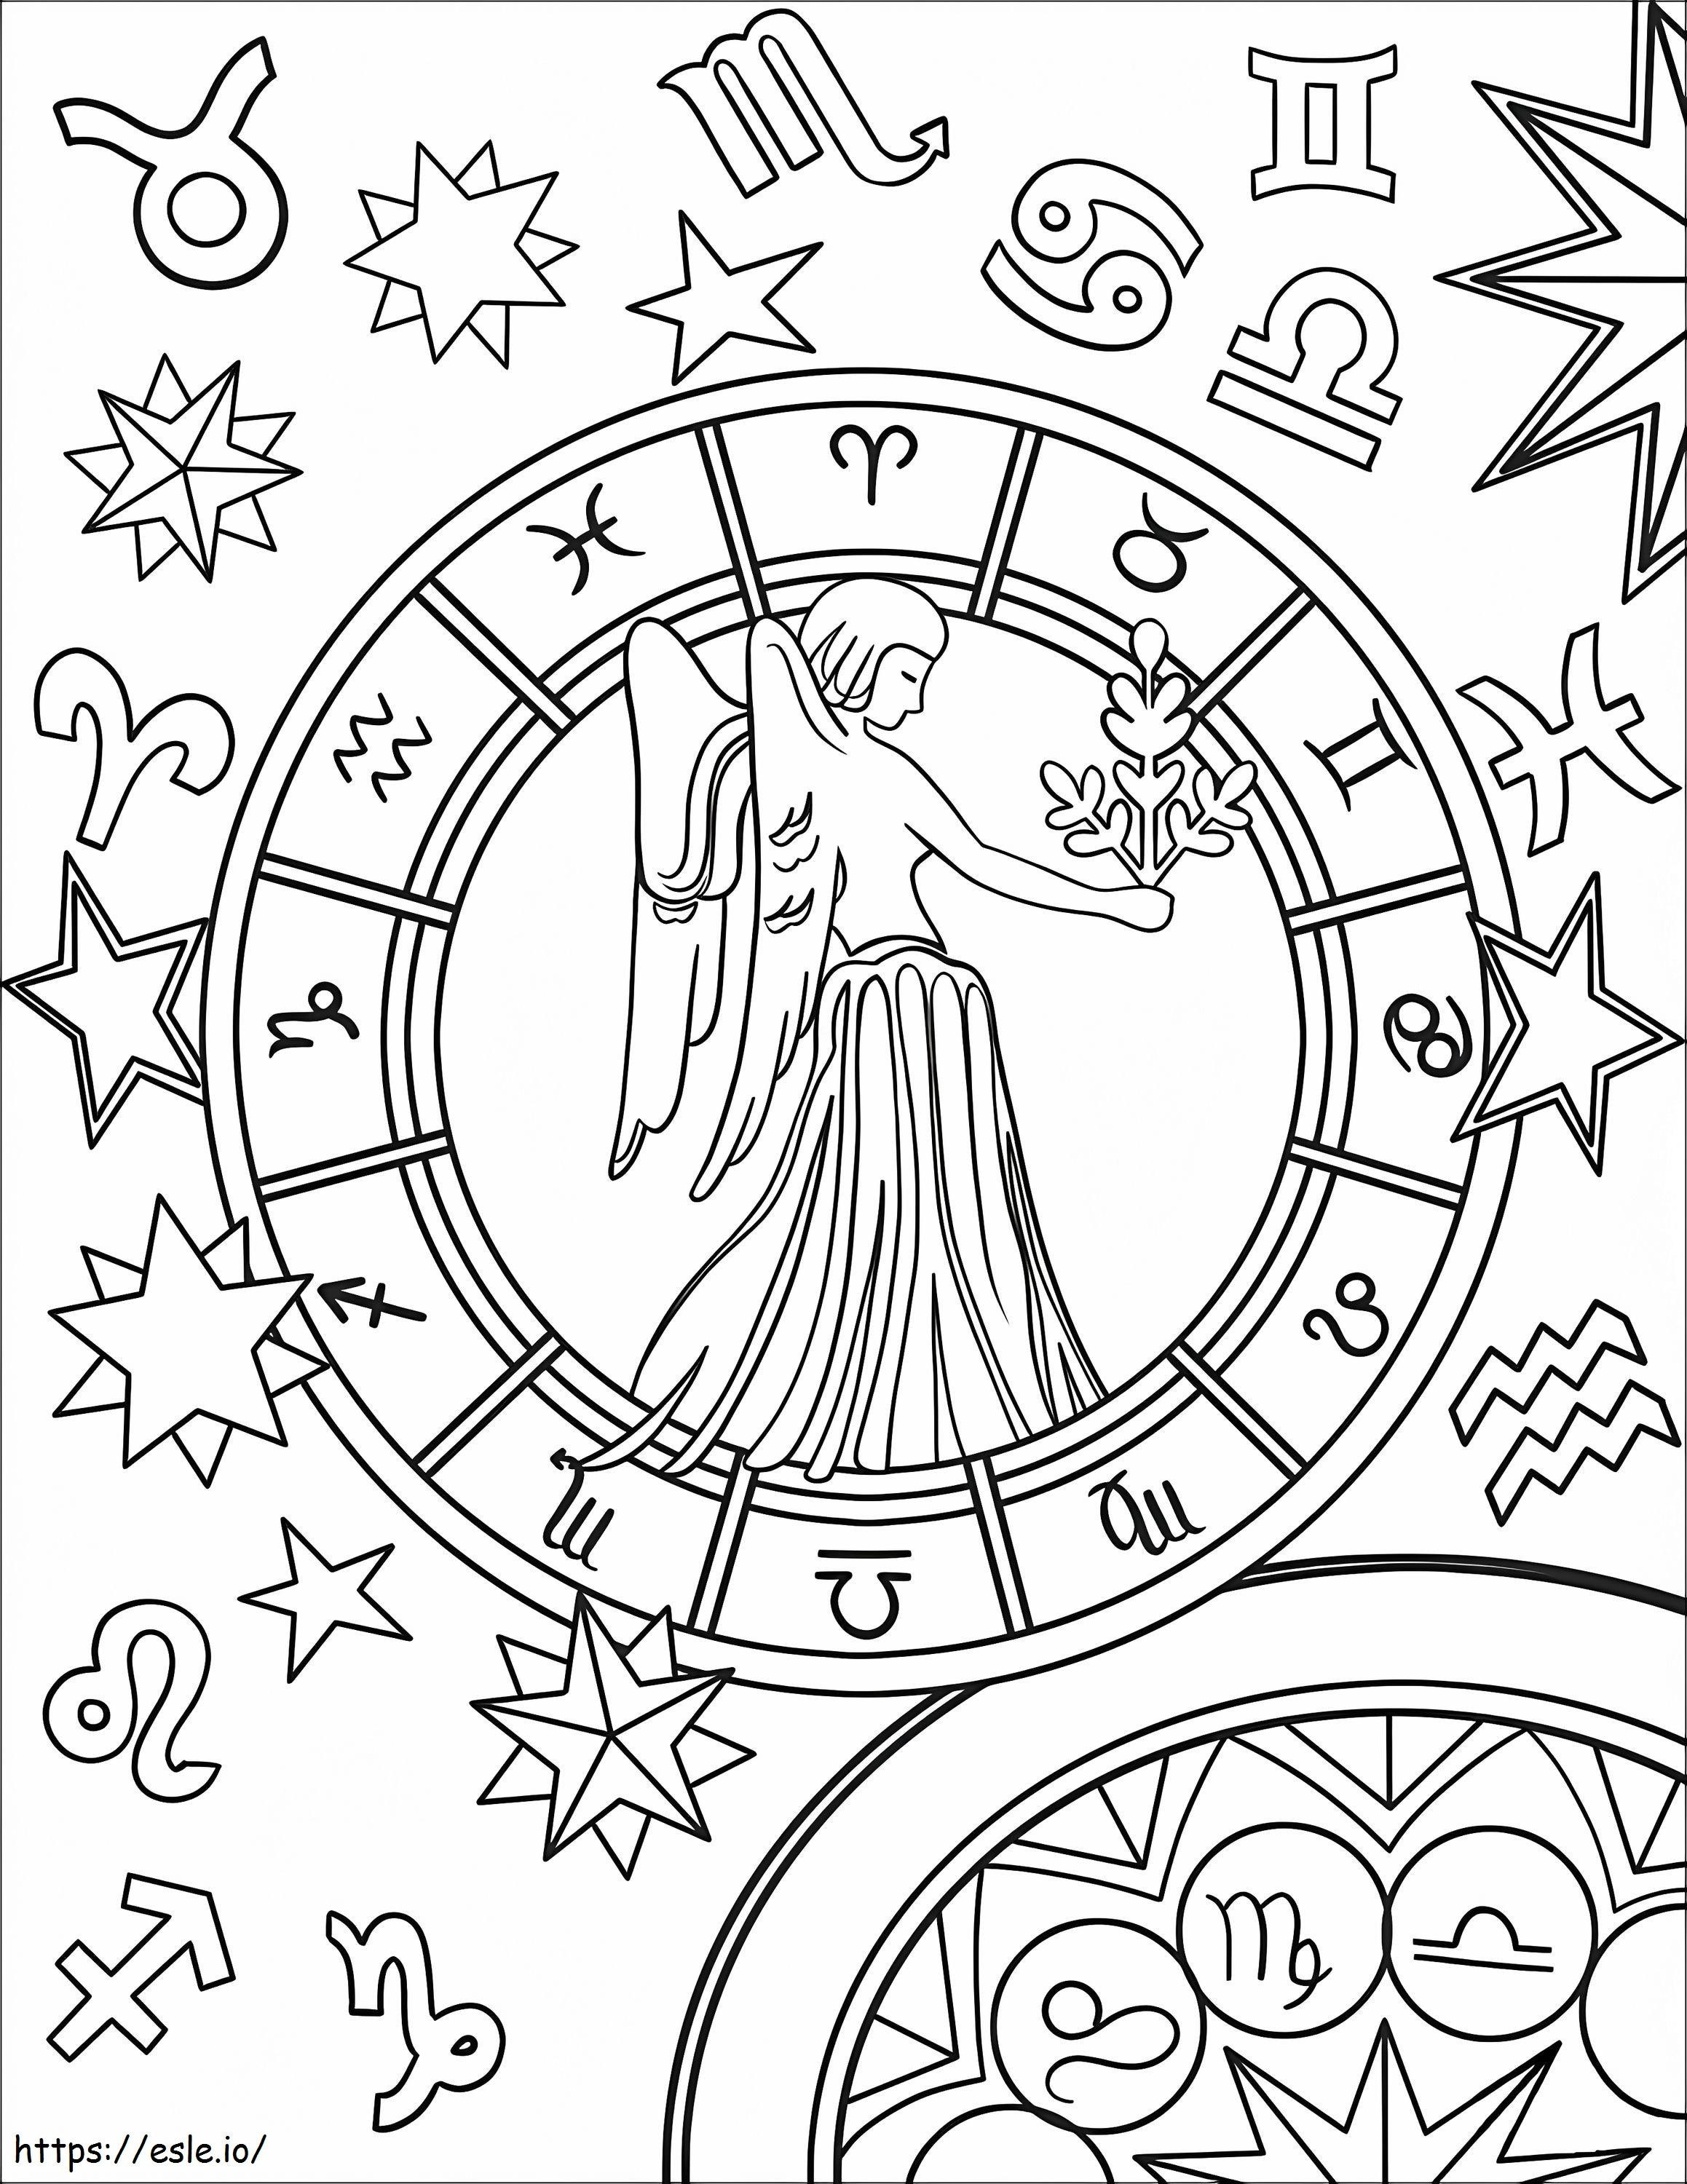 1597796322 Znak zodiaku Panna kolorowanka